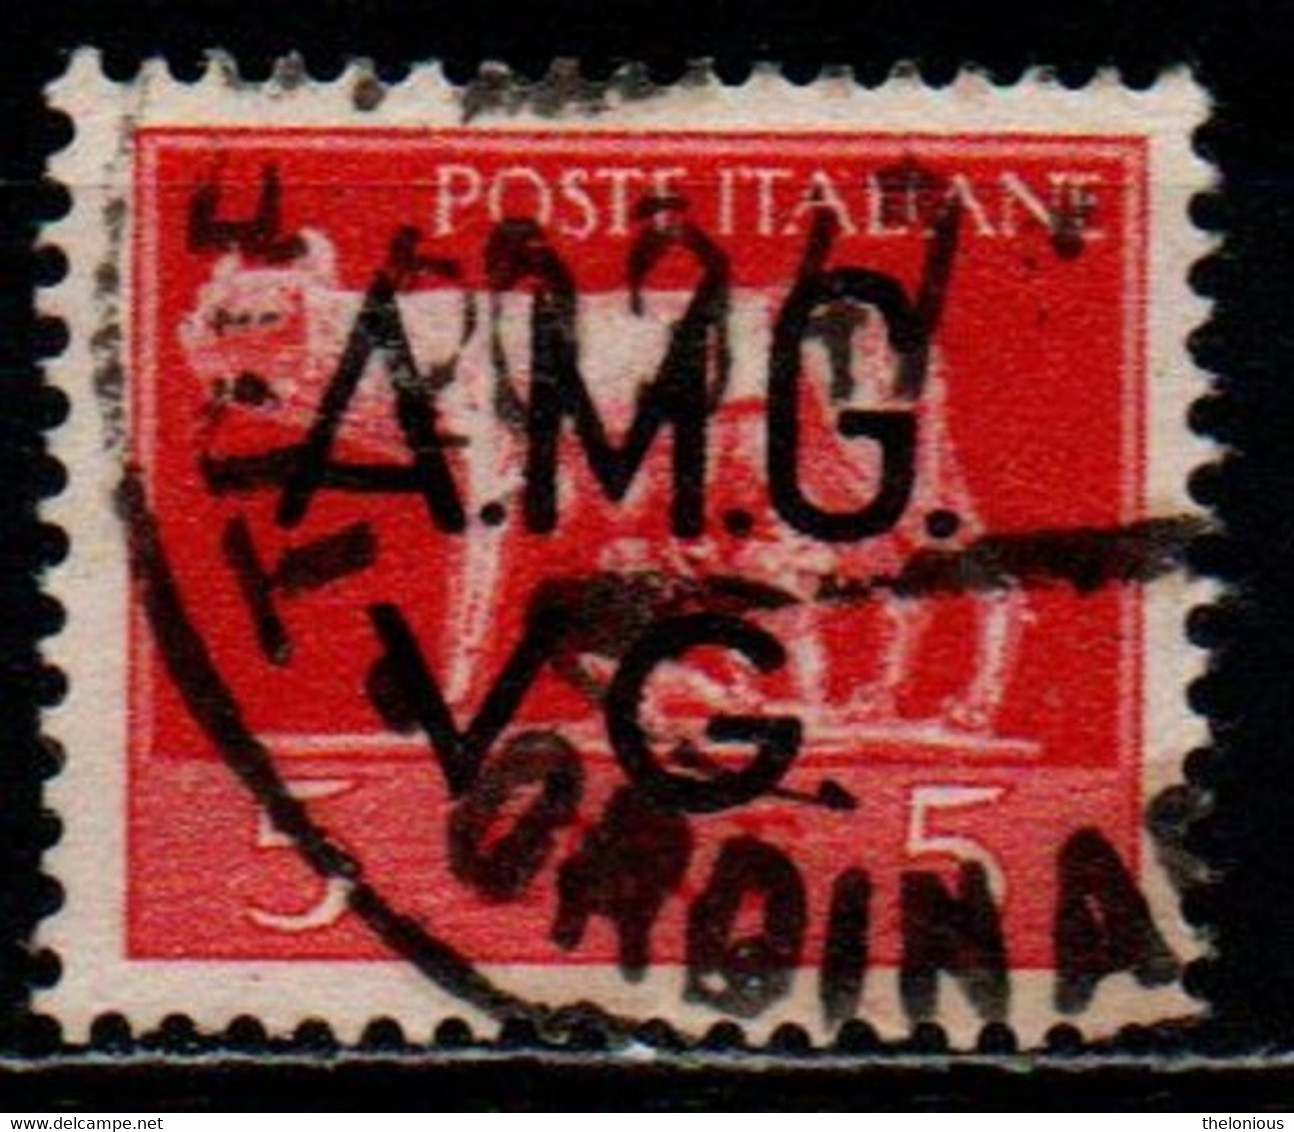 # 1945 - AMG - Venezia Giulia - Imperiale 5 Lire - Senza Fasci - Usato - Used